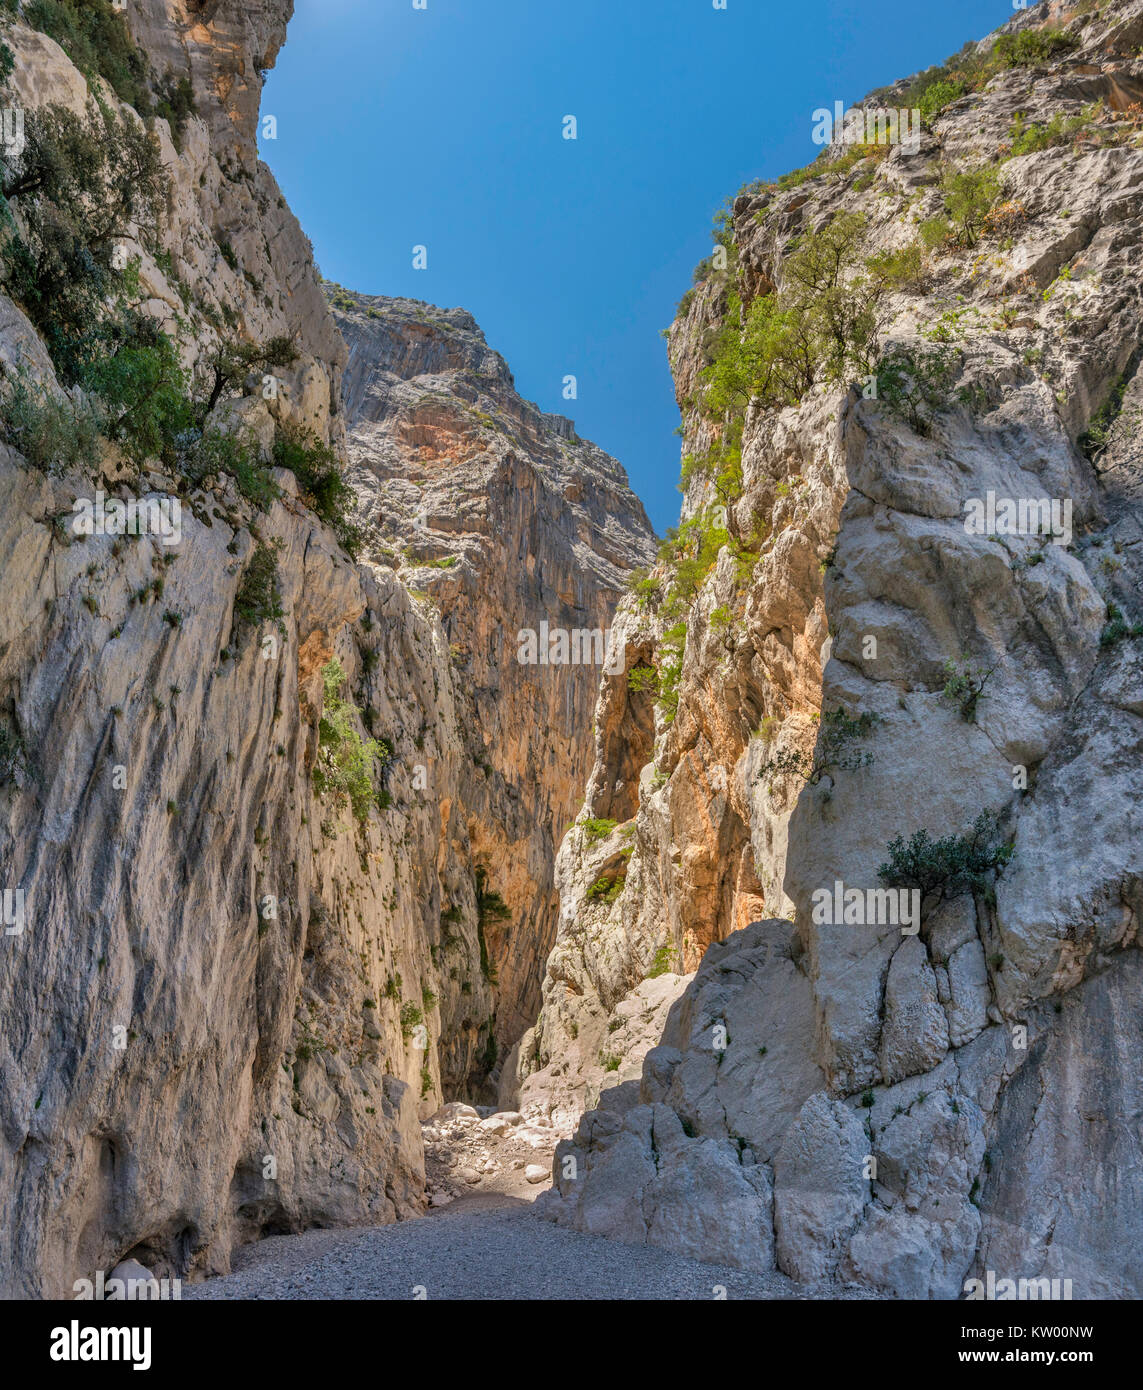 Limestone walls at Gorropu Canyon, Gola Su Gorropu, Gennargentu National Park, Nuoro province, Sardinia, Italy Stock Photo